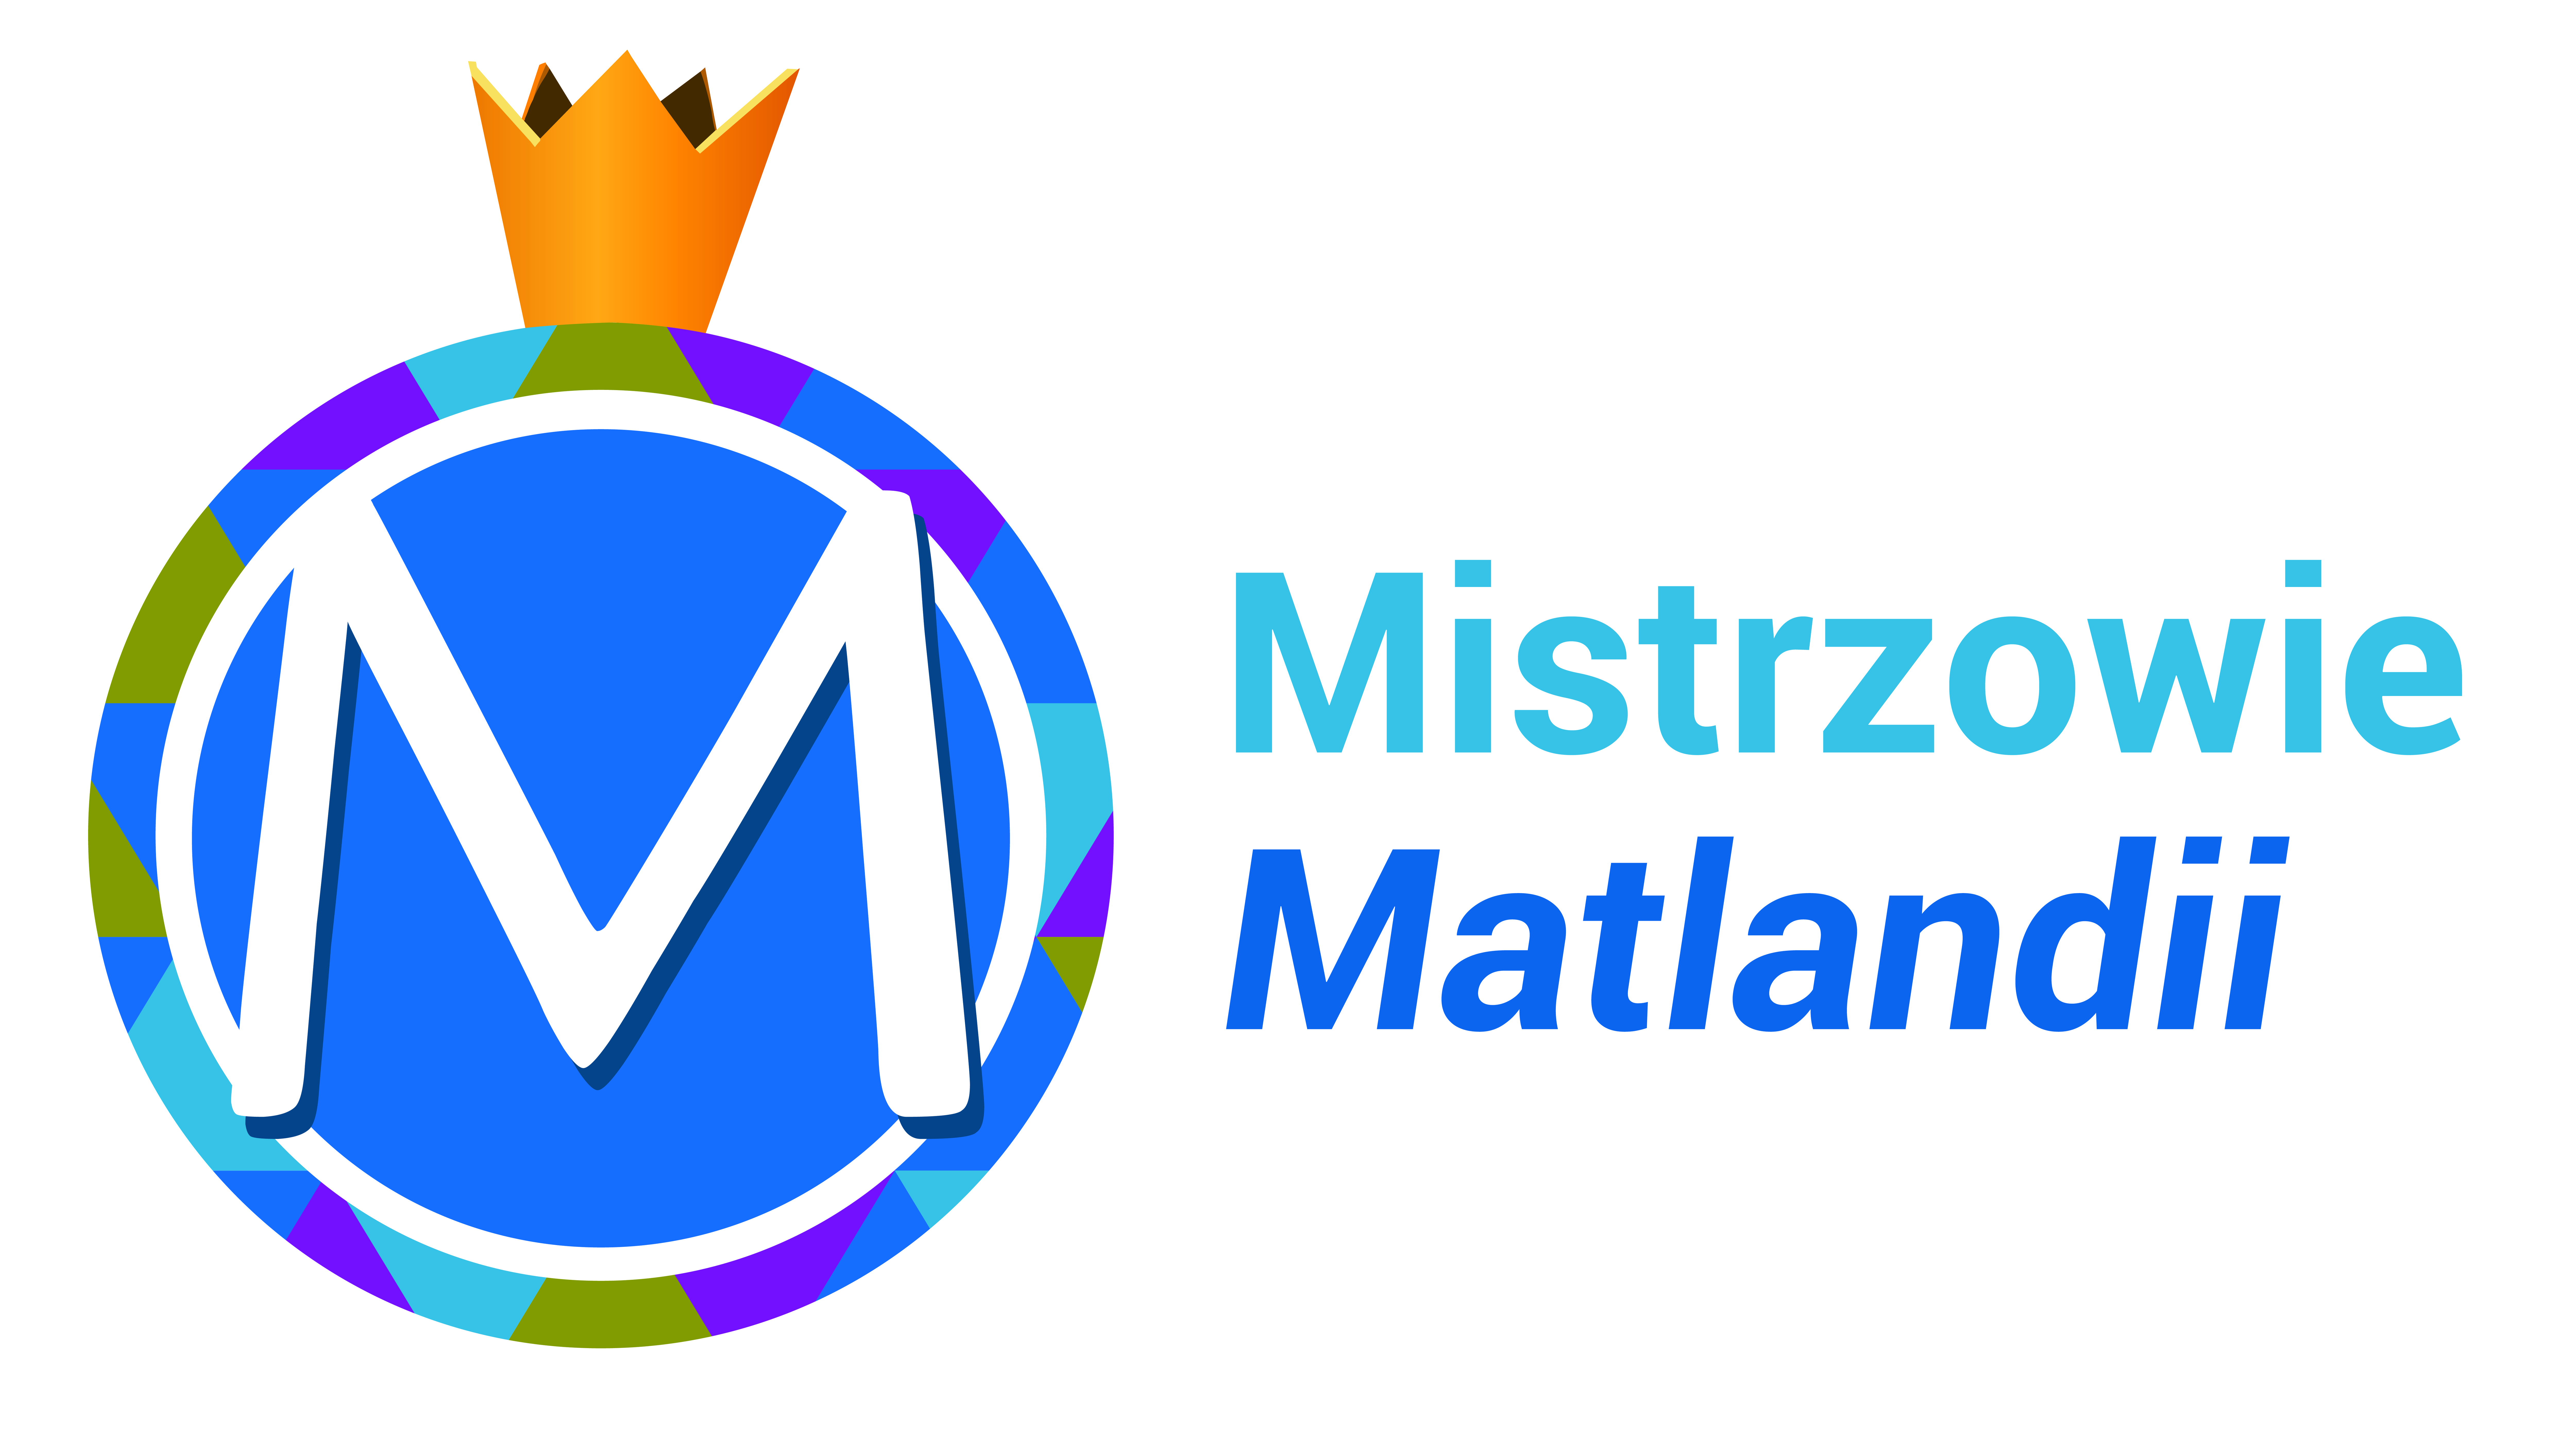 Logo Mistrzowie Matlandii